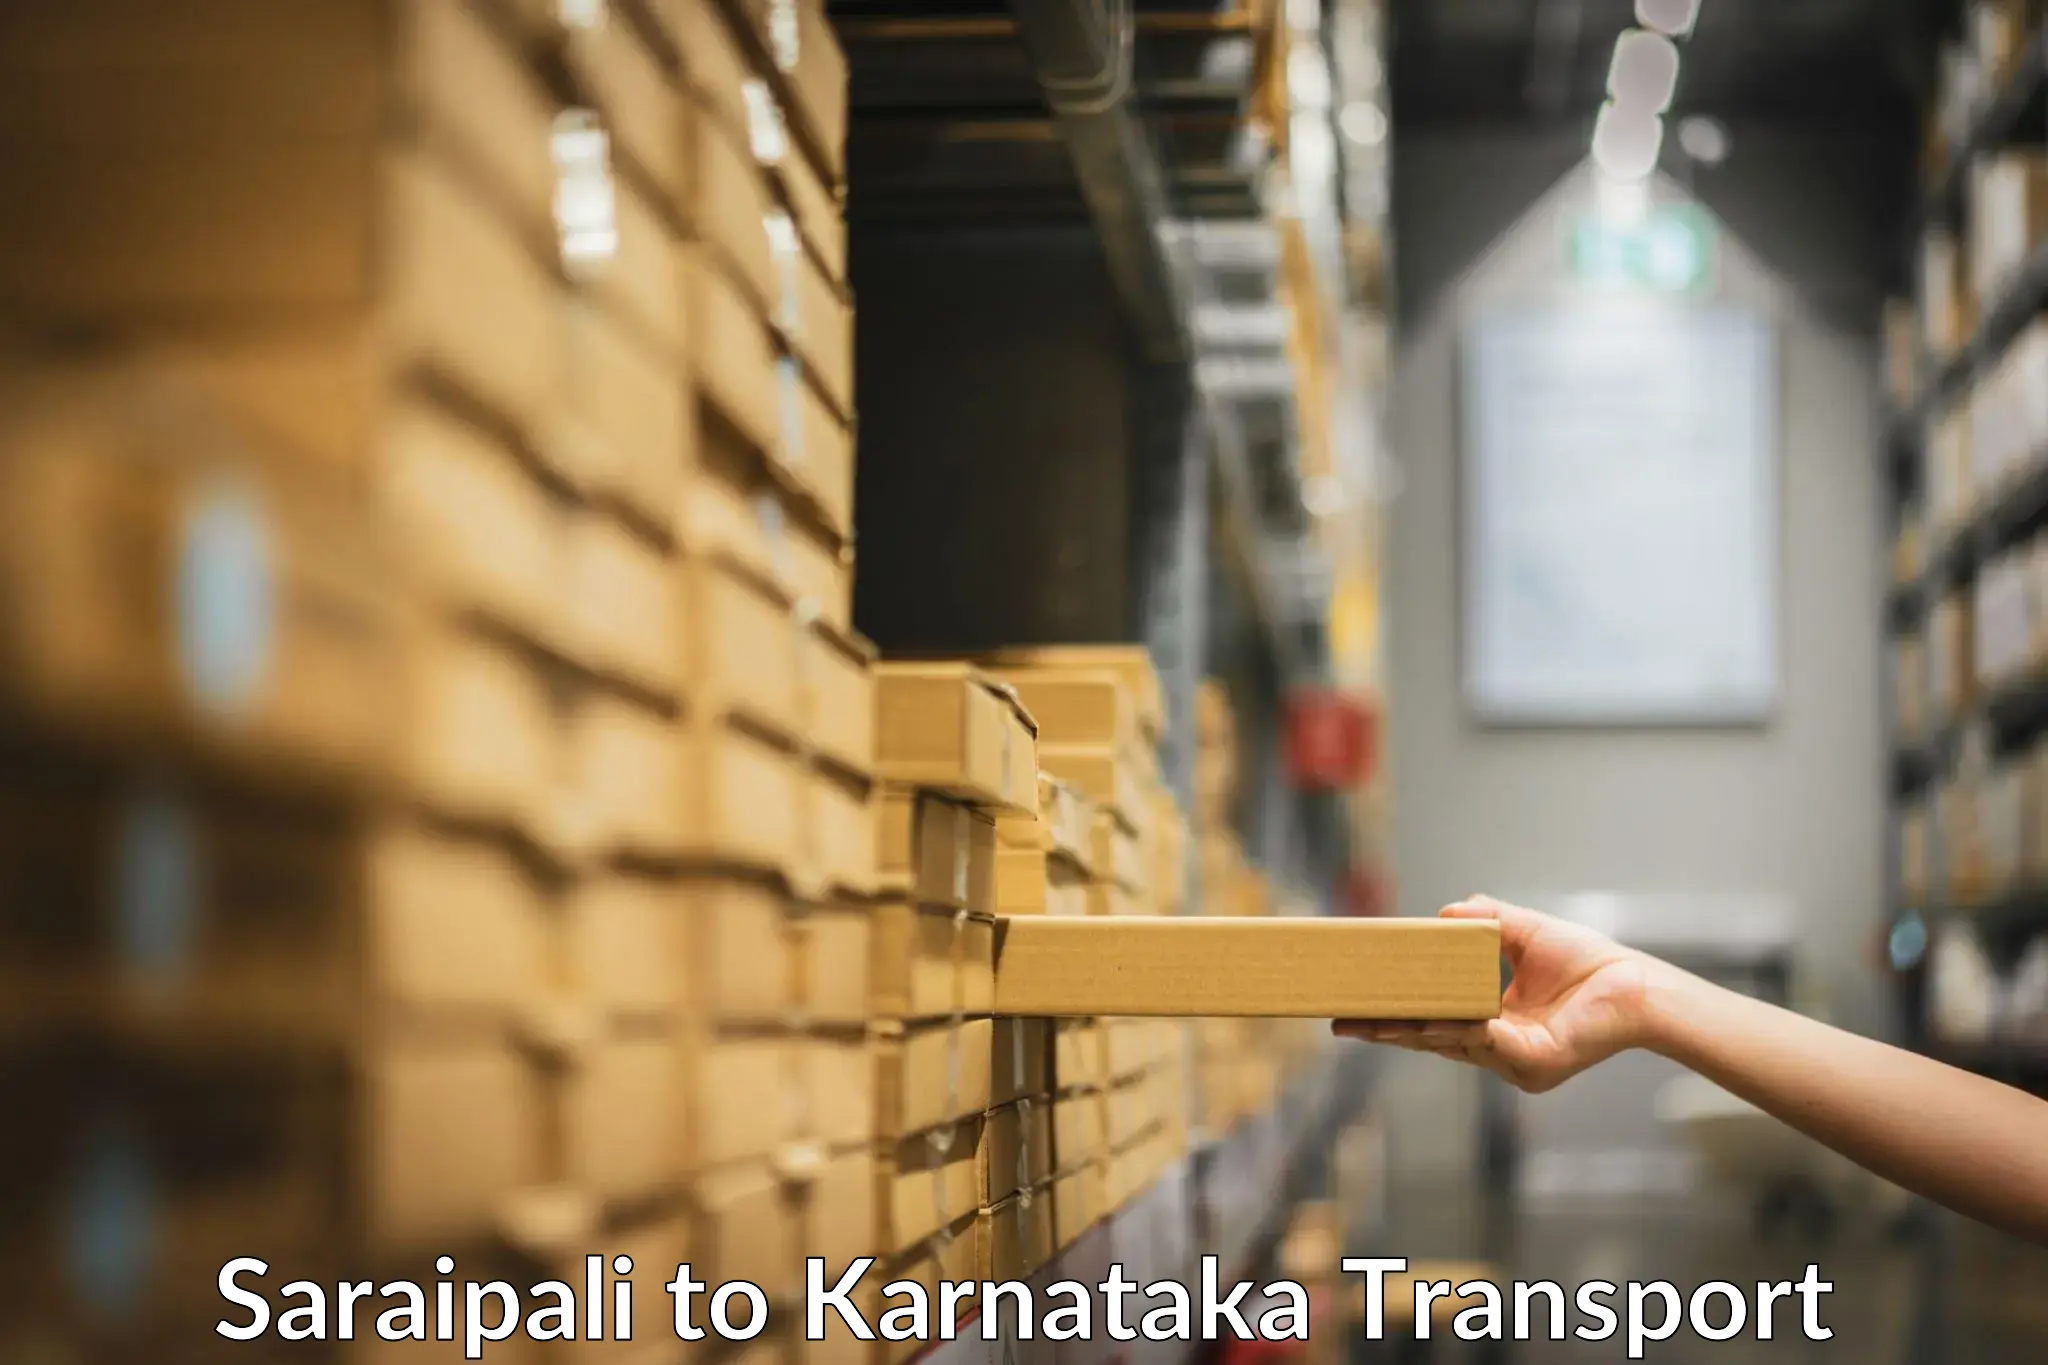 Truck transport companies in India Saraipali to Koppal